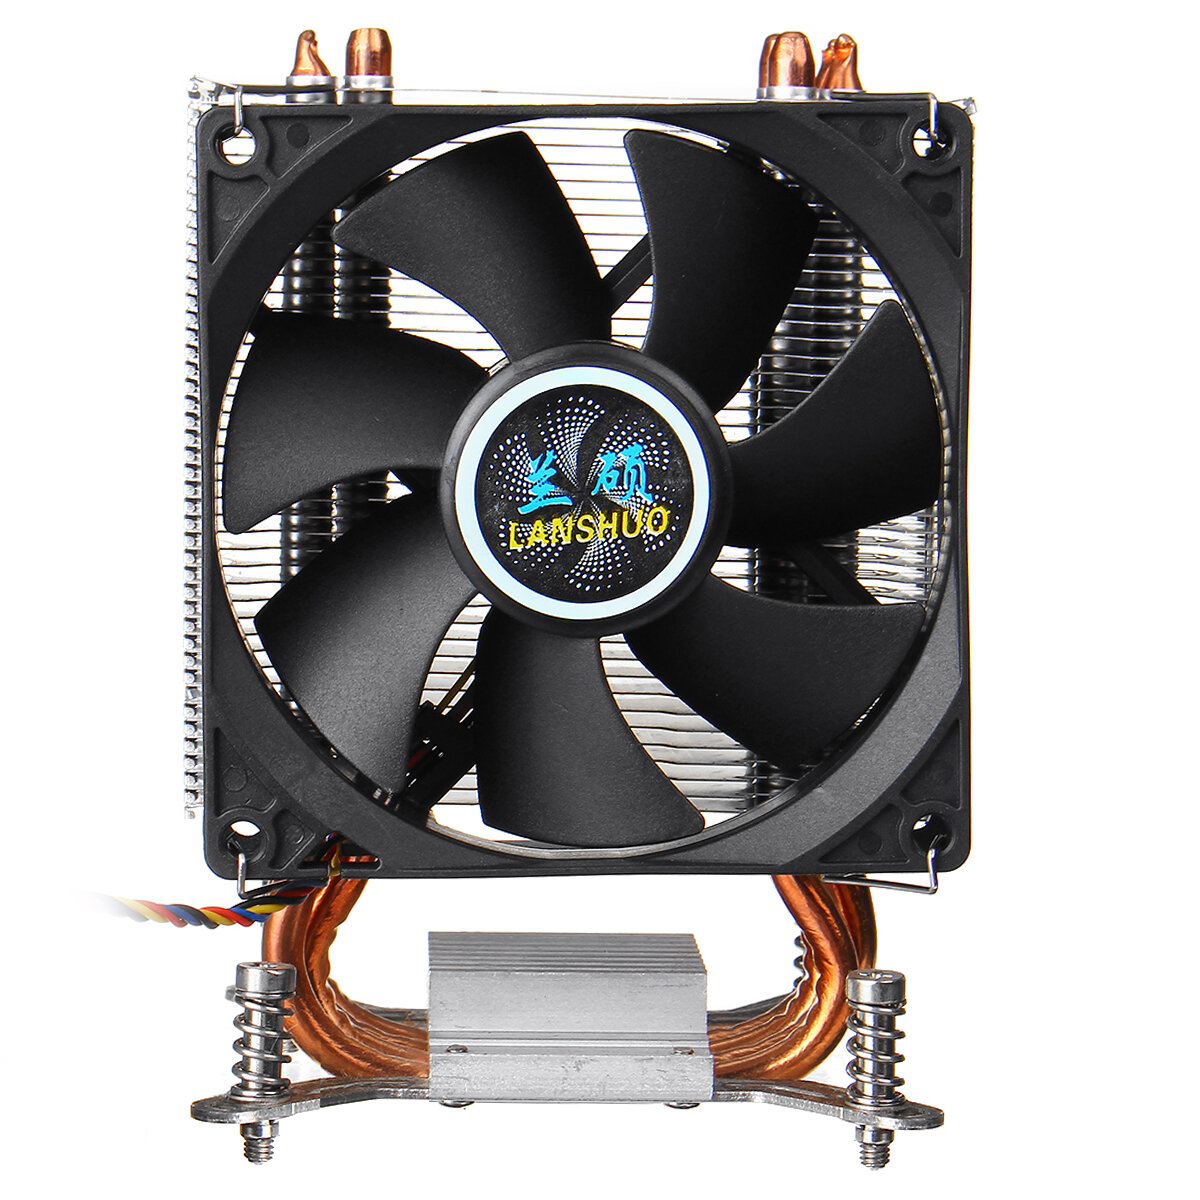 4 Copper Heatpipes CPU Cooler 9cm Quiet Fan Radiator 3/4Pin Cooling Fan Heatsink Cooler For 115x 2011 X58 X79 X99 X299 A